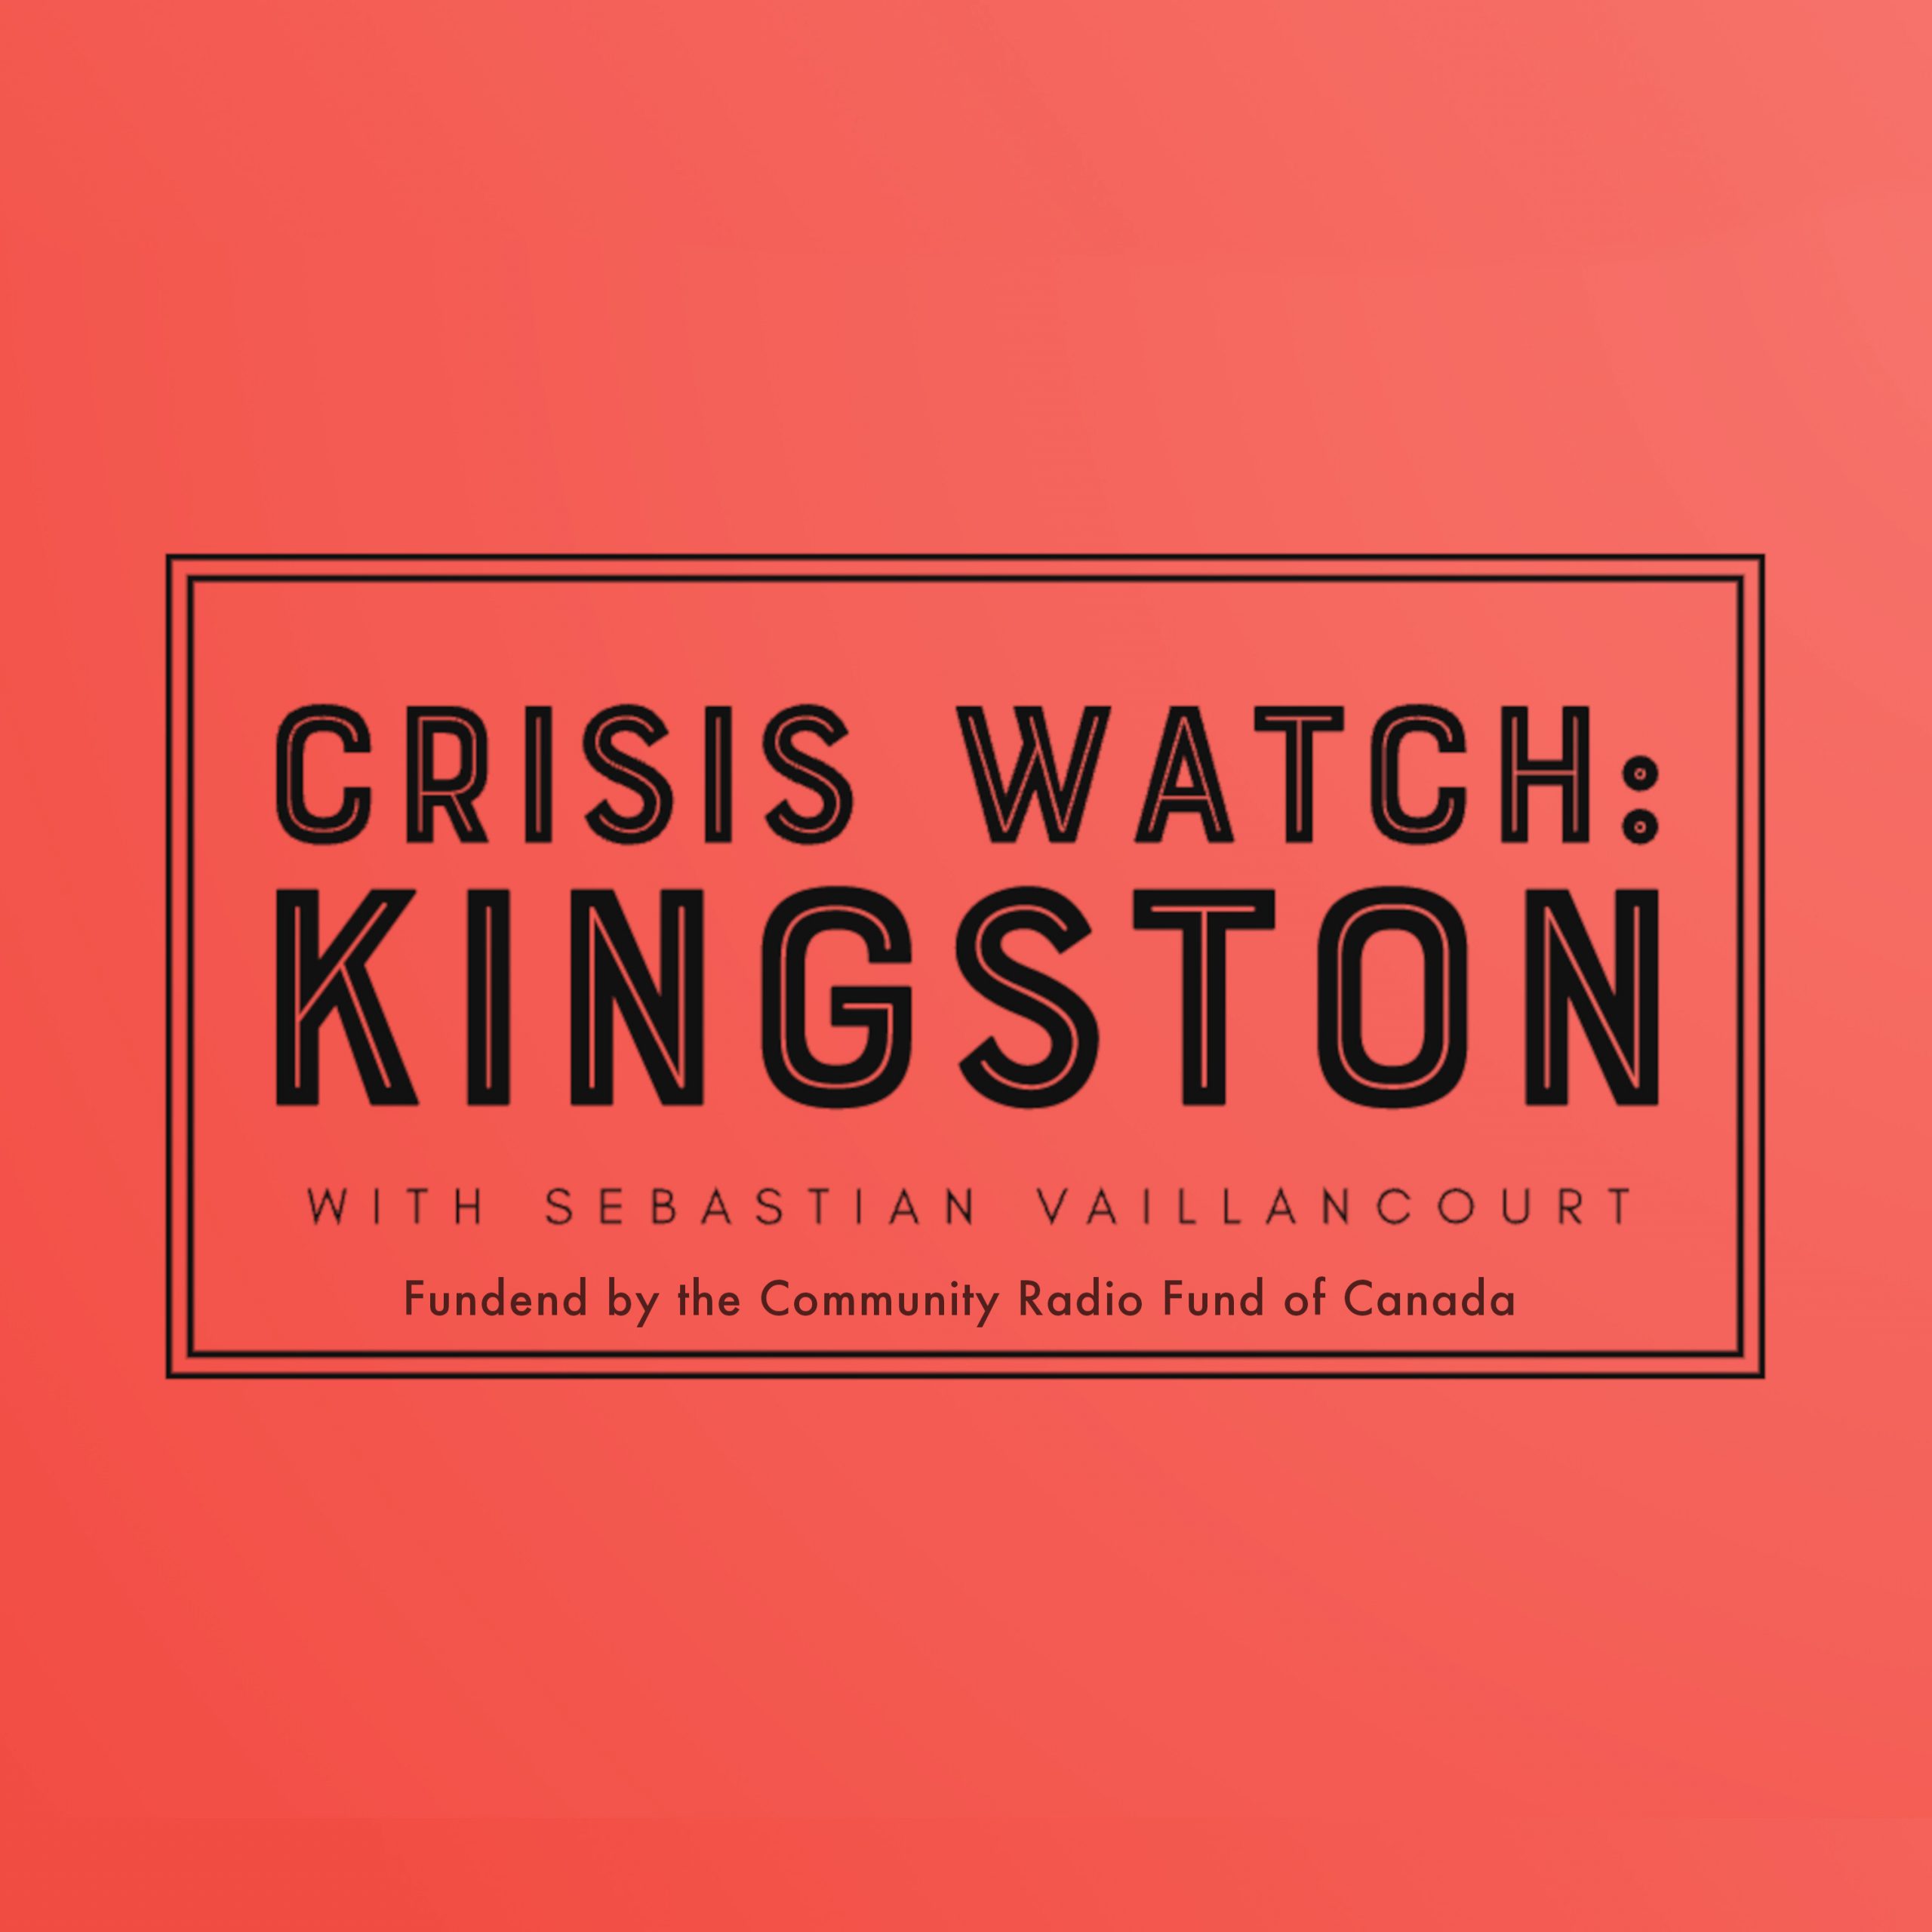 Crisis Watch: Kingston - CFRC Podcast Network